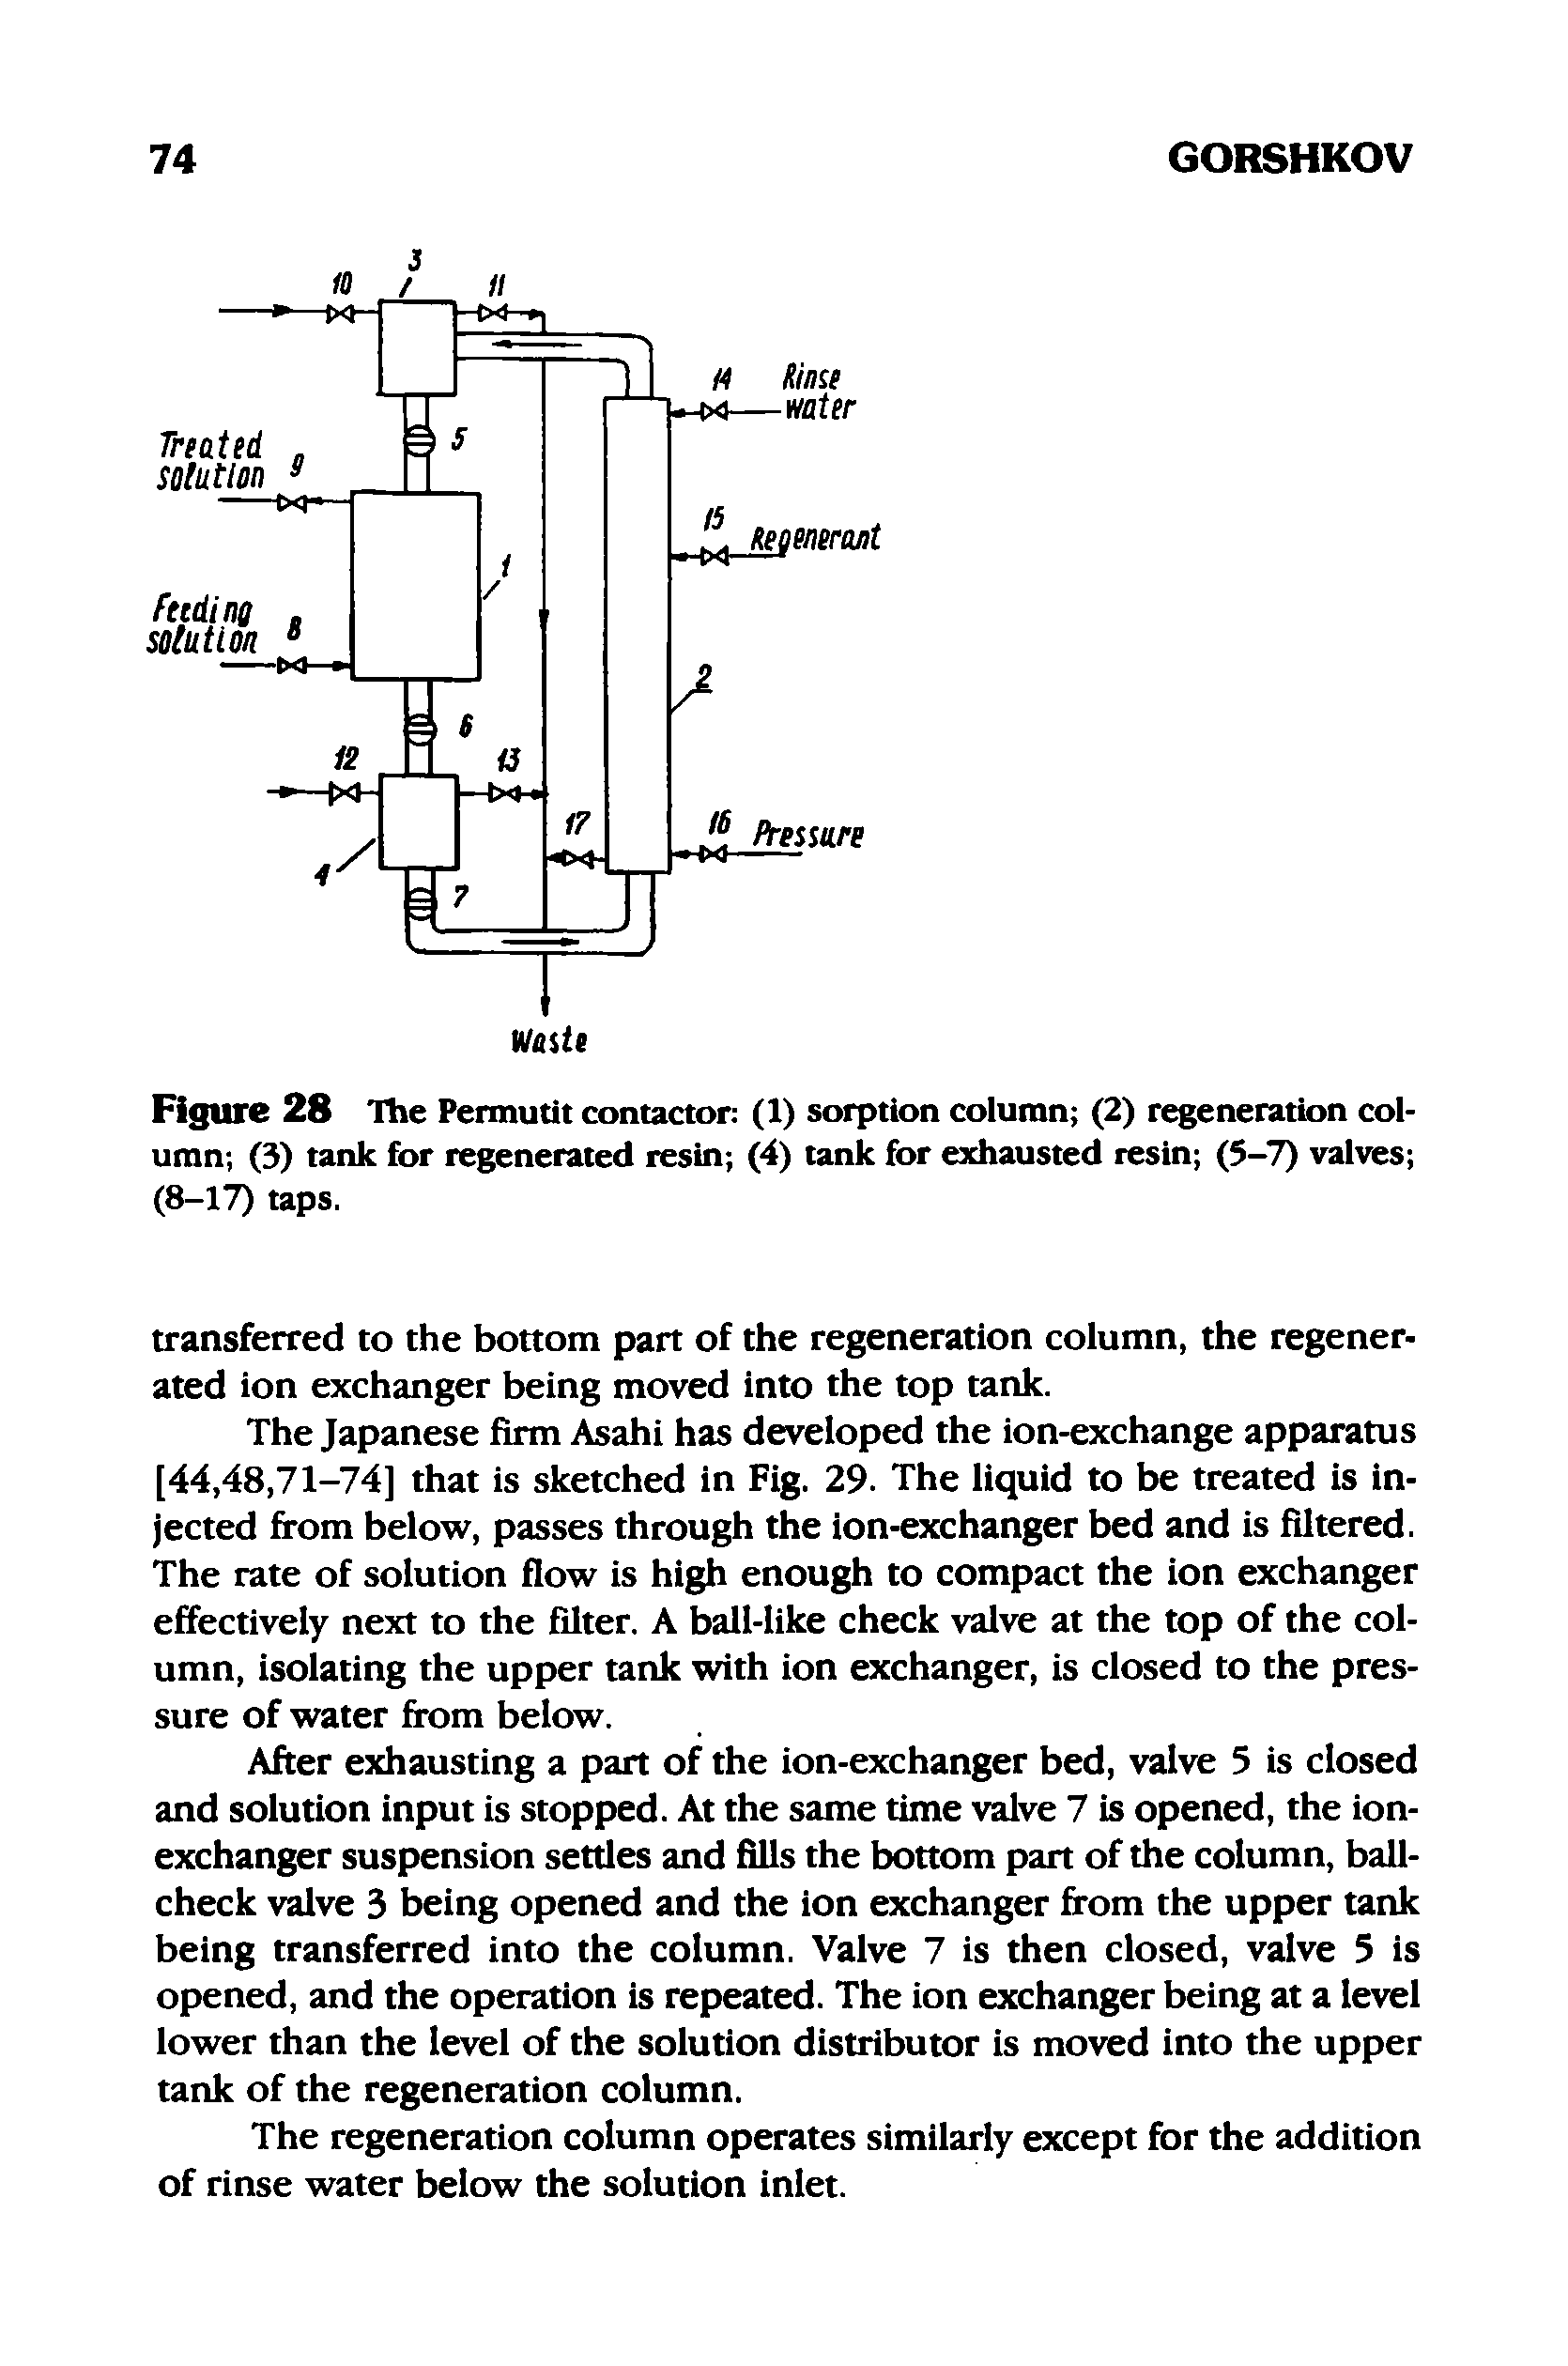 Figure 28 The Pennutit contactor (1) sorption column (2) regeneration column (3) tank for regenerated resin (4) tank for exhausted resin (5-7) valves (8-17) taps.